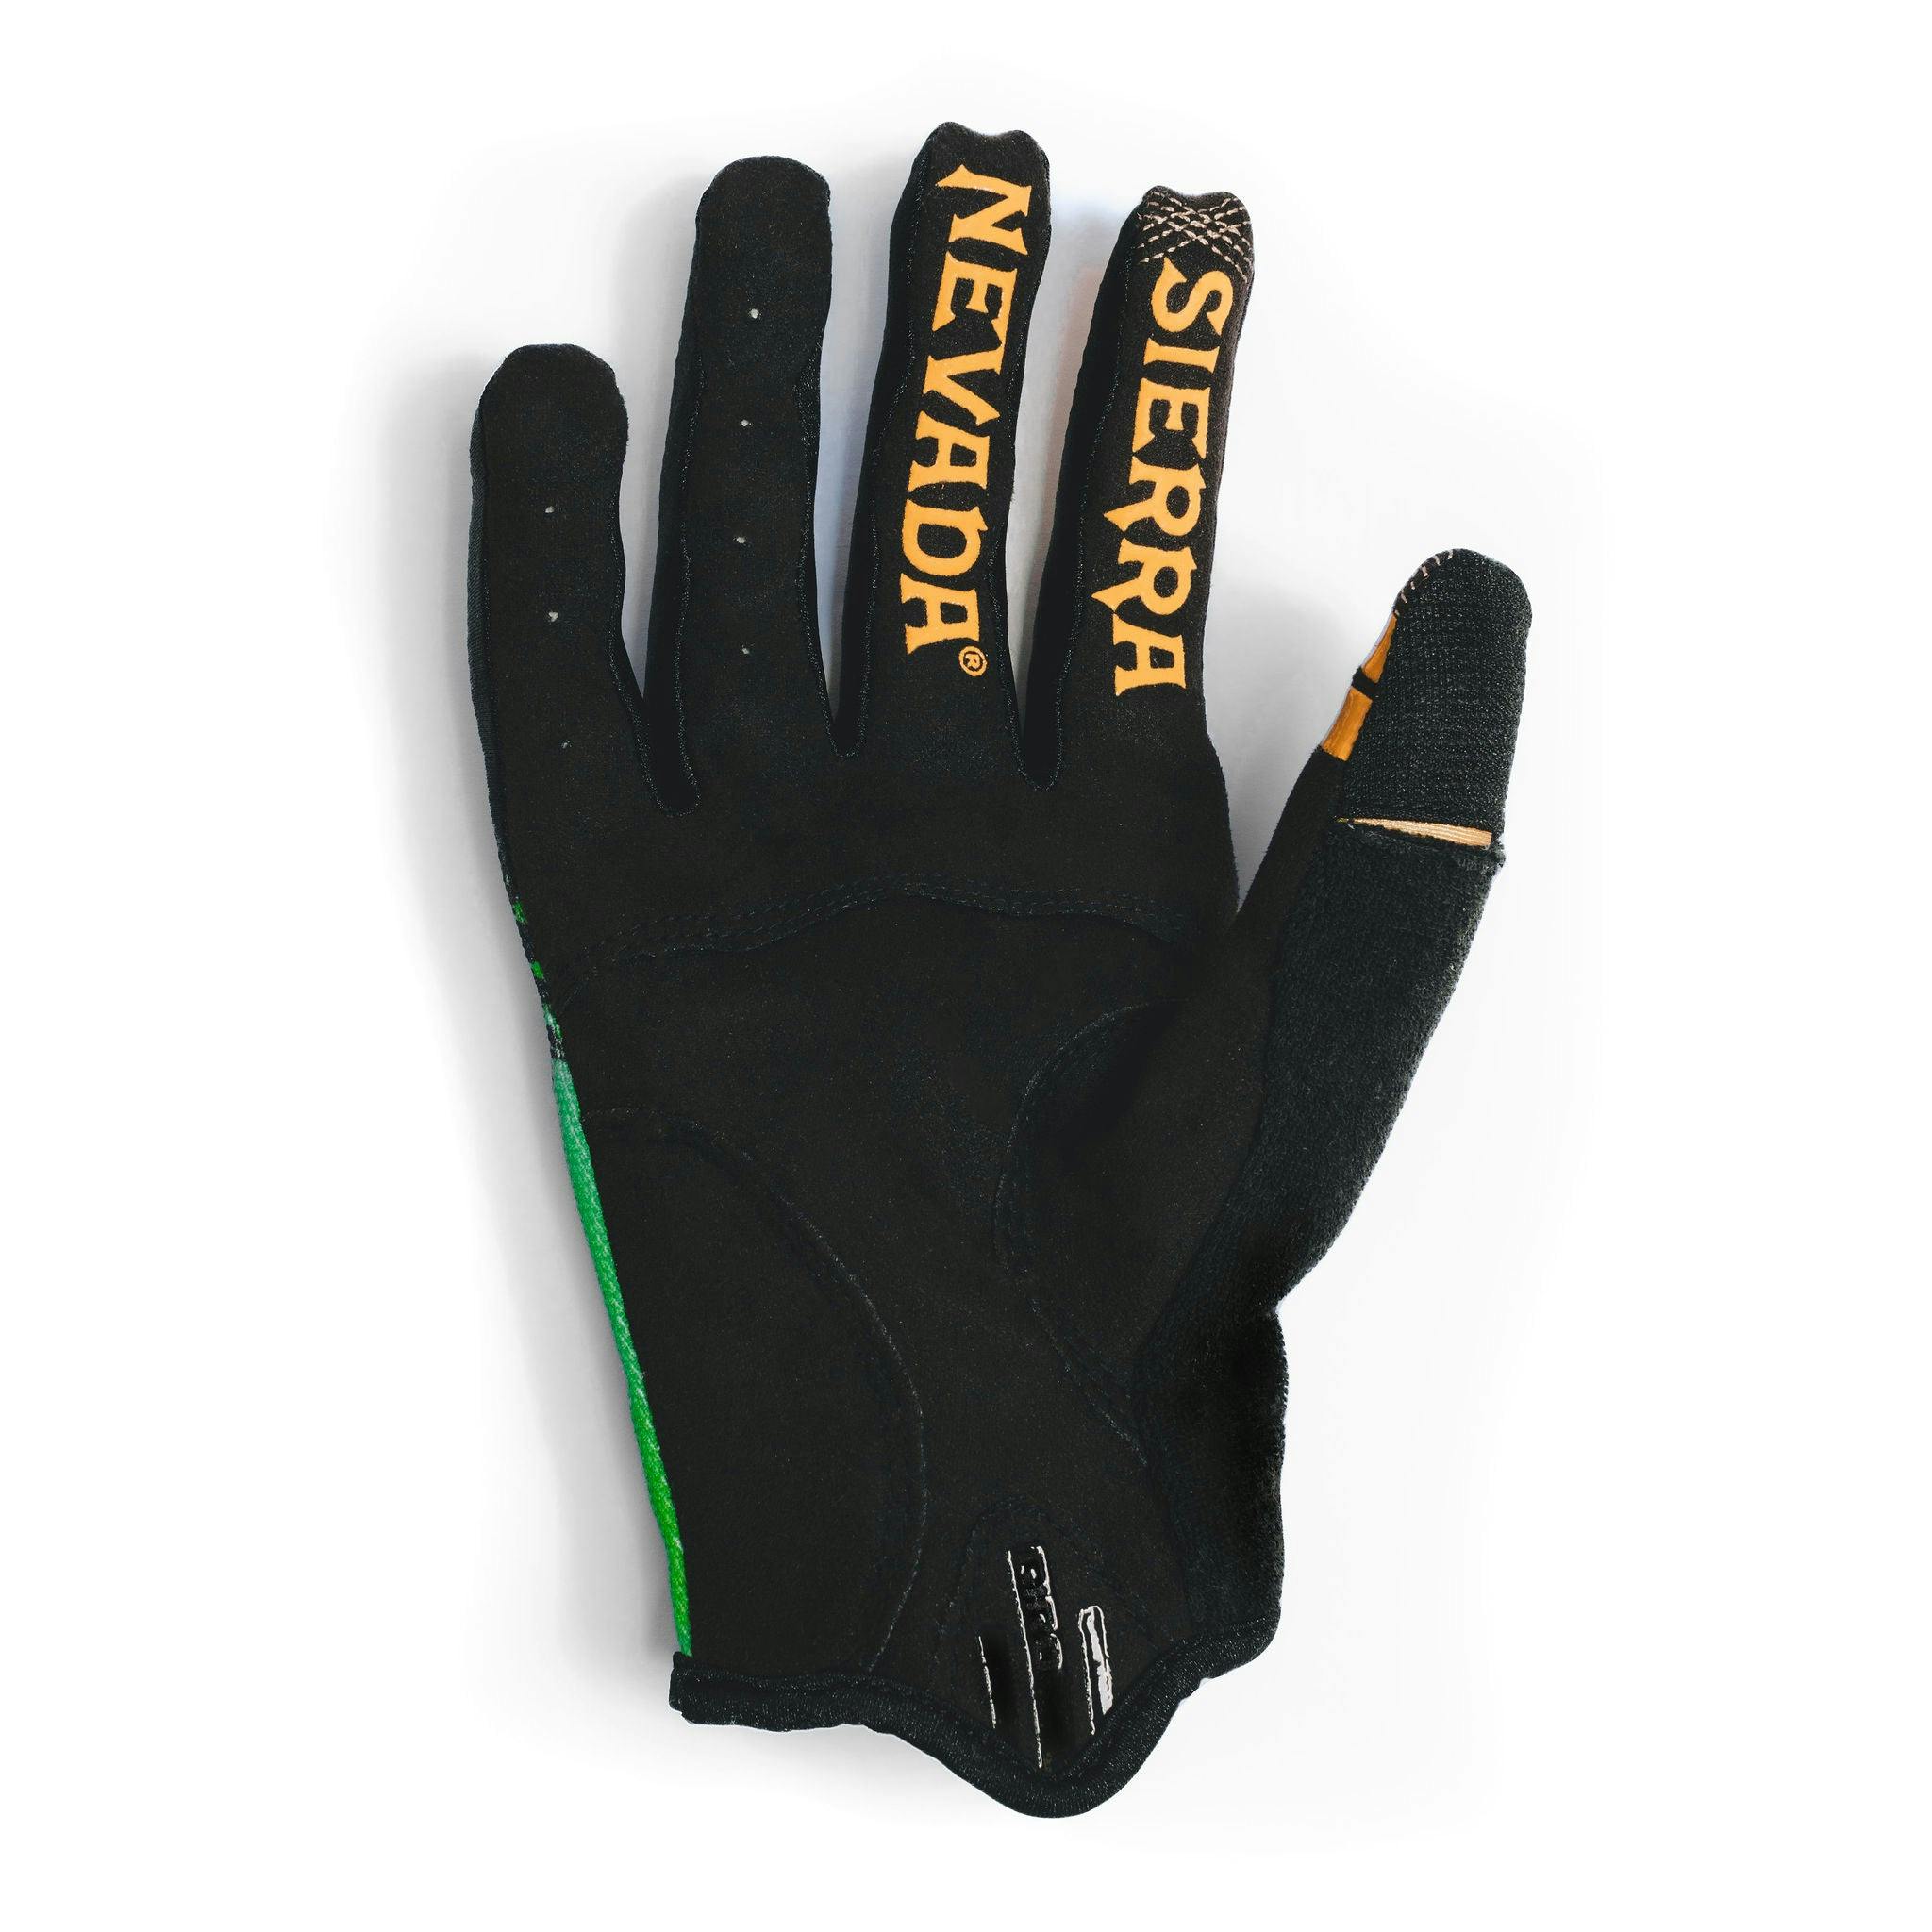 Sierra Nevada x Giro cycling gloves - bottom/palm view